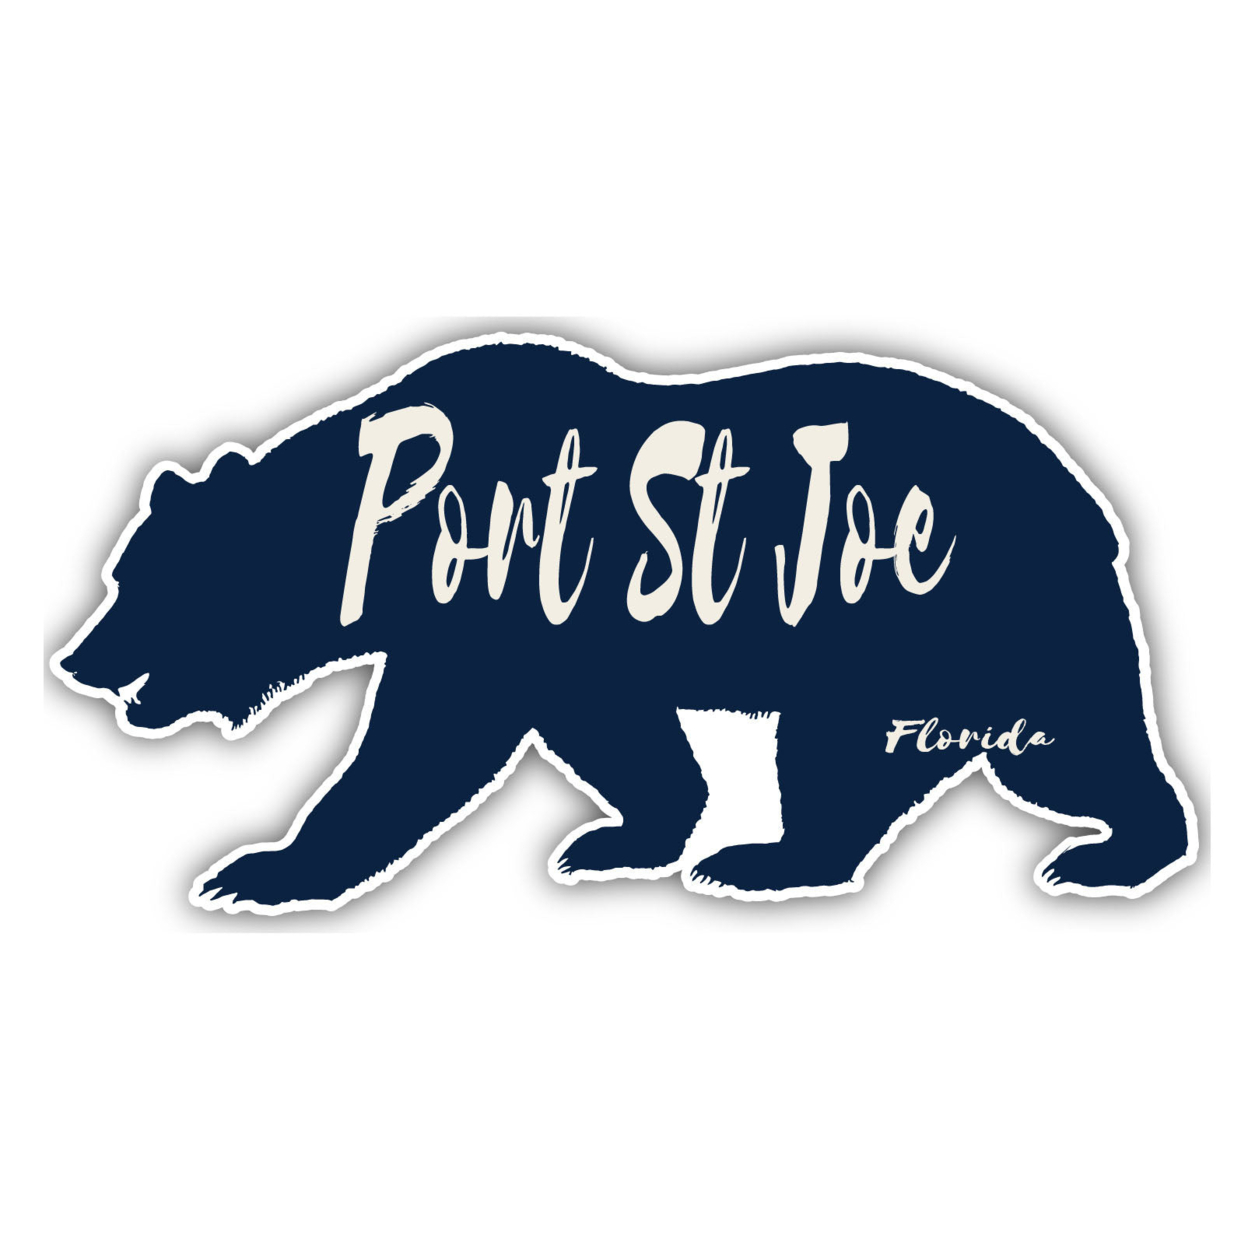 Port St Joe Florida Souvenir Decorative Stickers (Choose Theme And Size) - Single Unit, 2-Inch, Bear